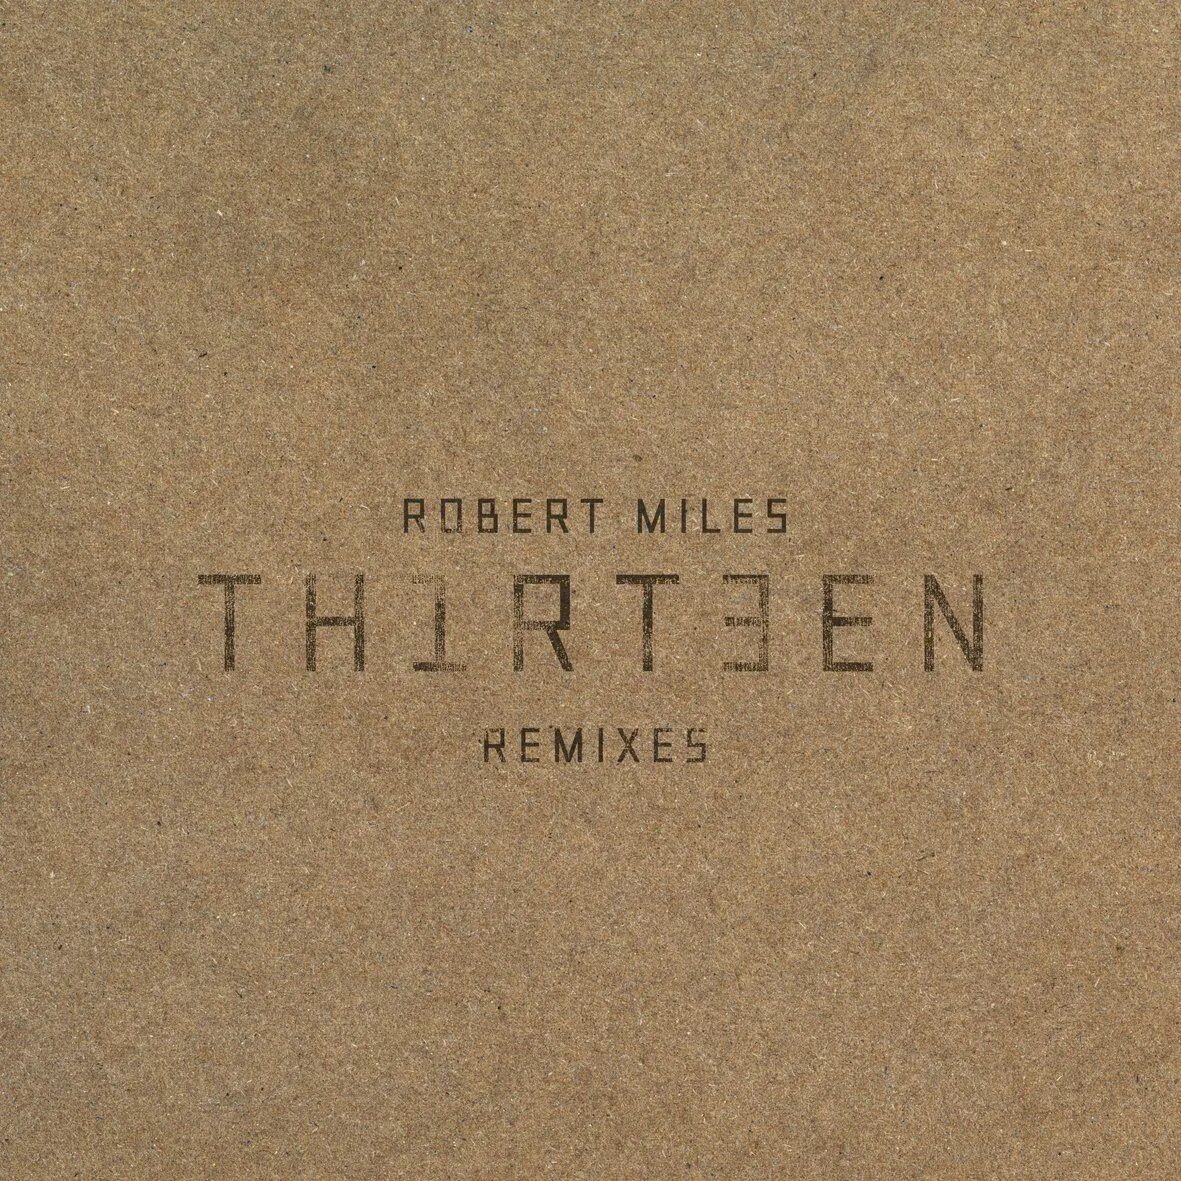 Robert miles remix. Robert Miles th1rt3en. Robert Miles Thirteen. Megadeth th1rt3en. Th1rt3en обложка альбома.